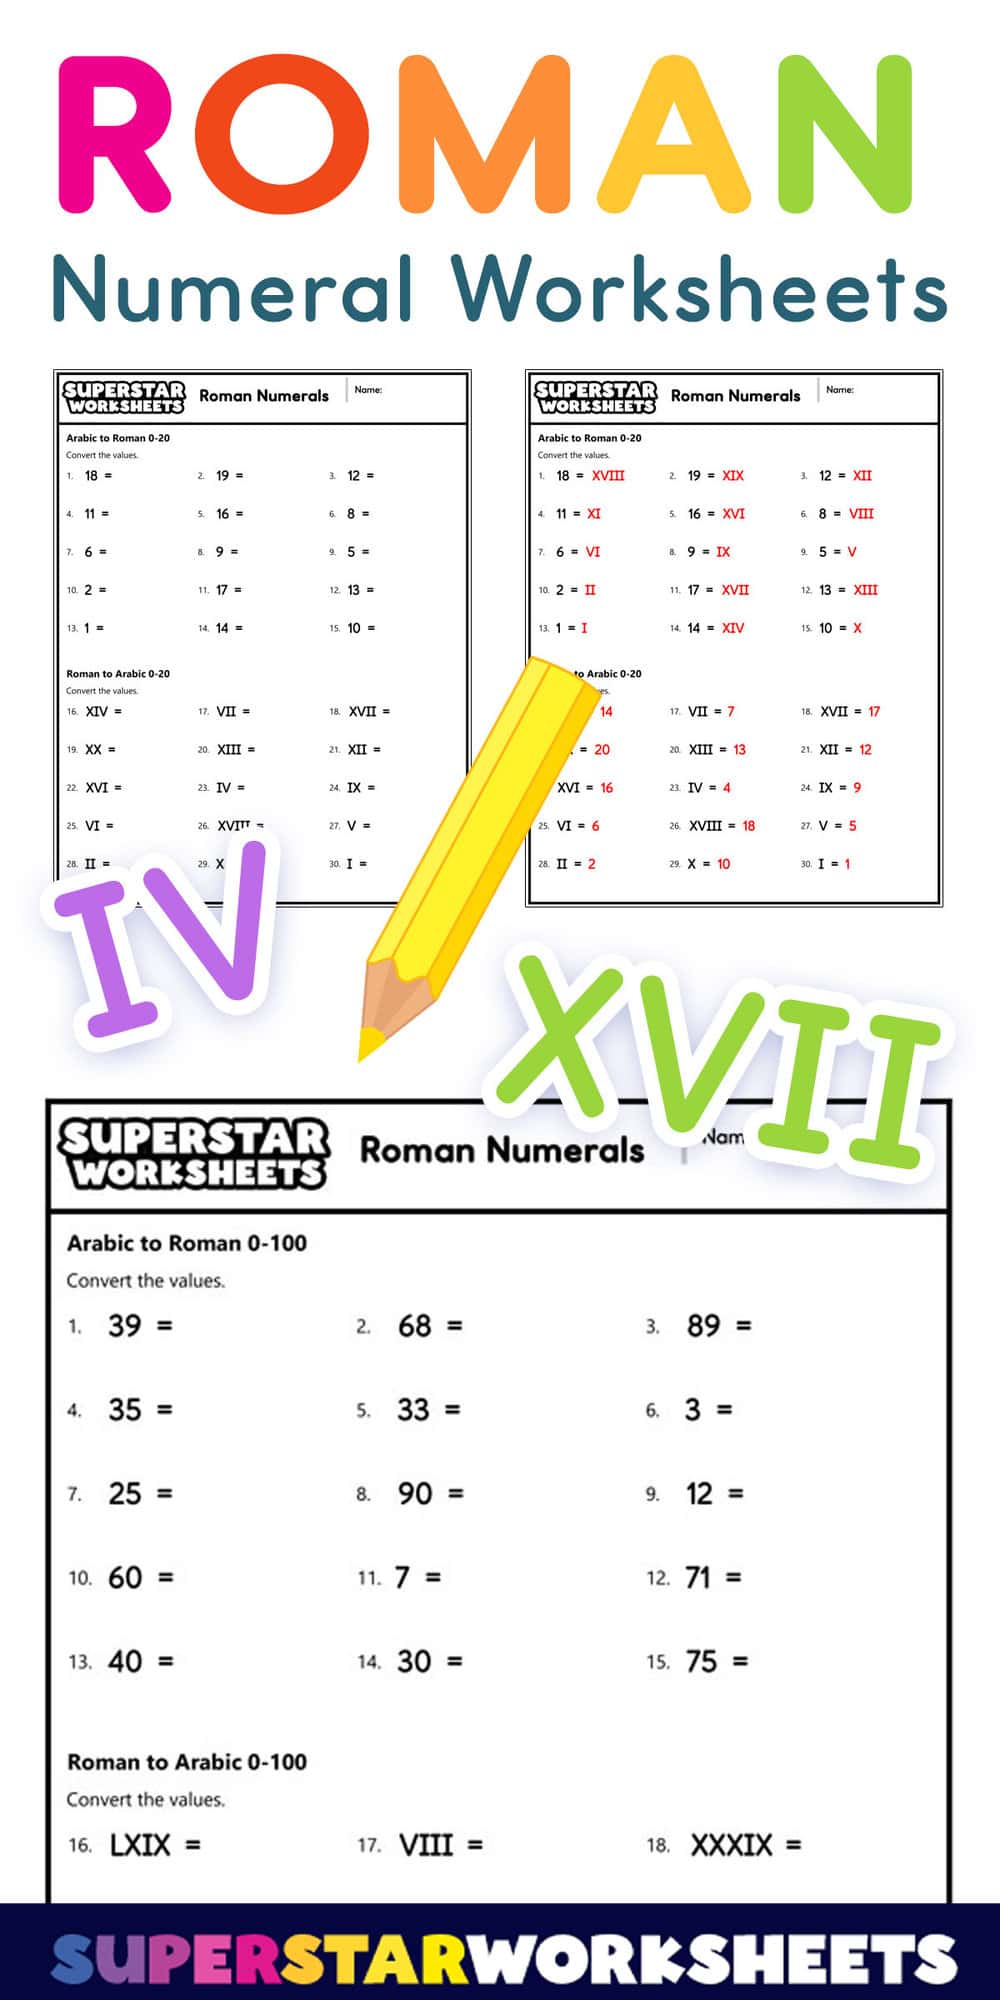 Roman Numerals Worksheets - Superstar Worksheets